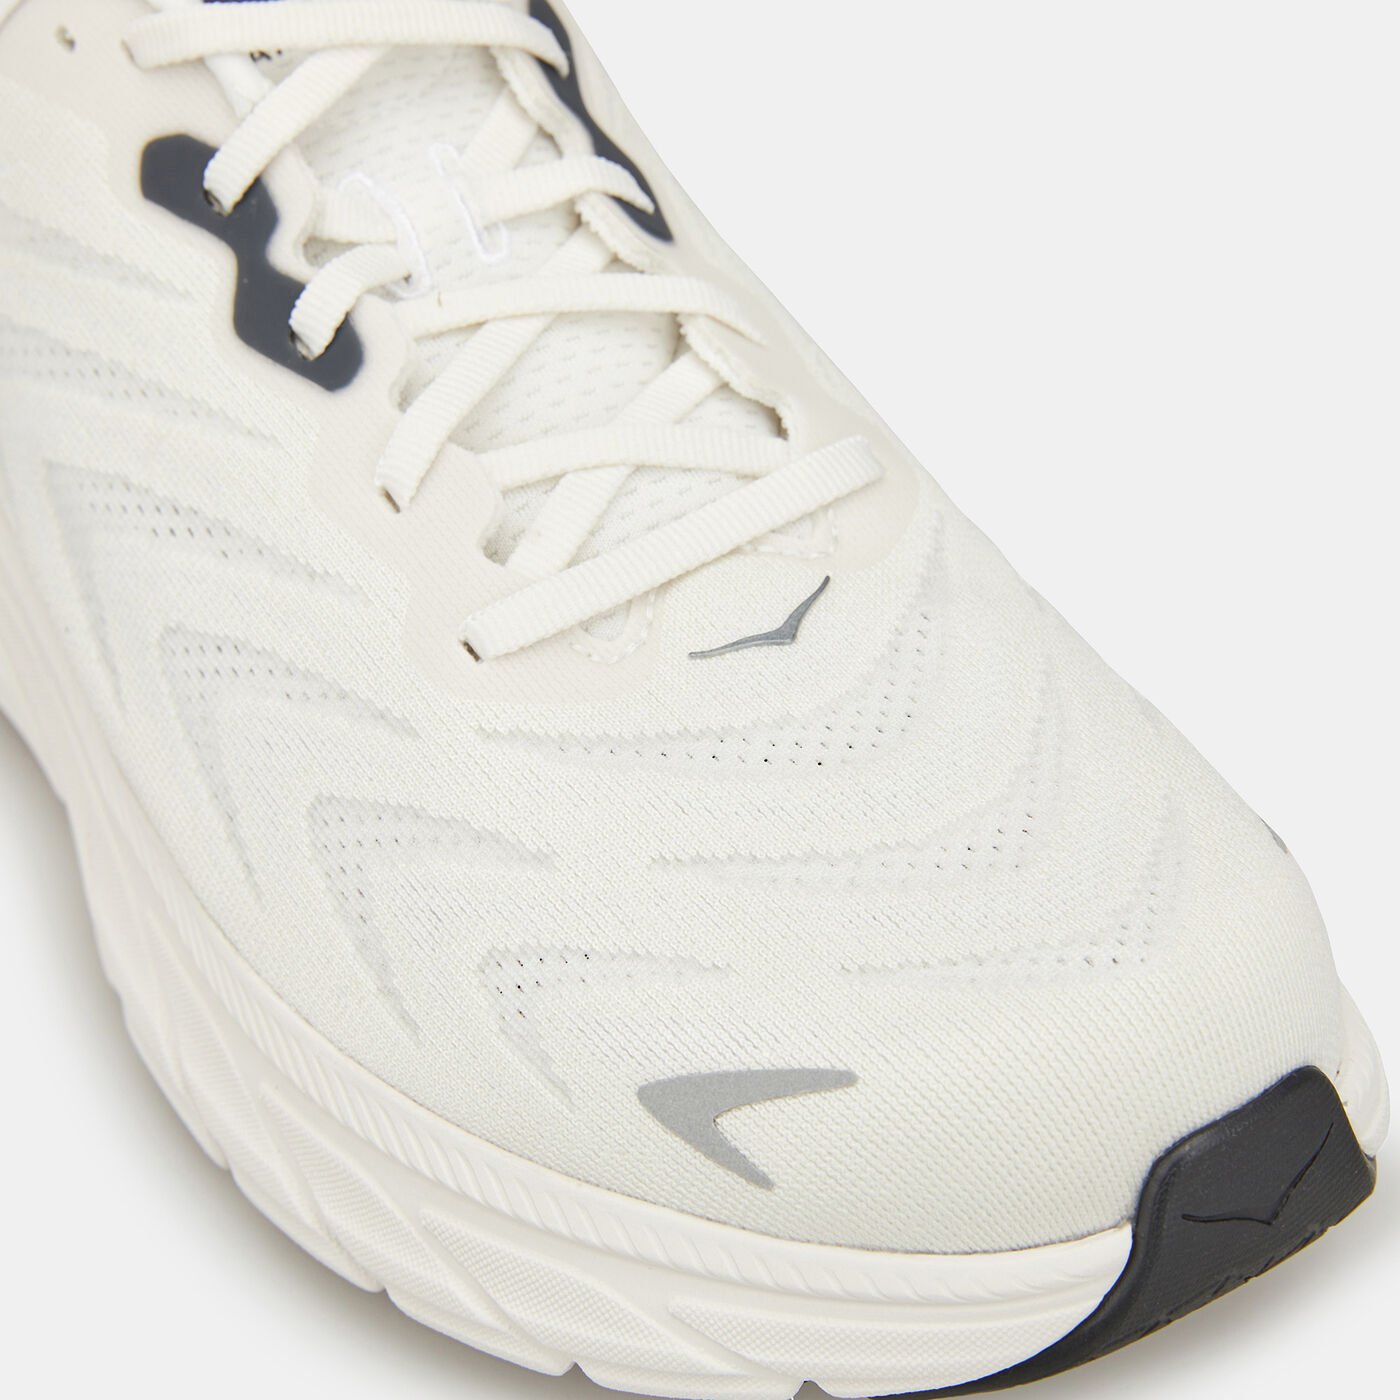 Men's Arahi 6 Stability Running Shoe